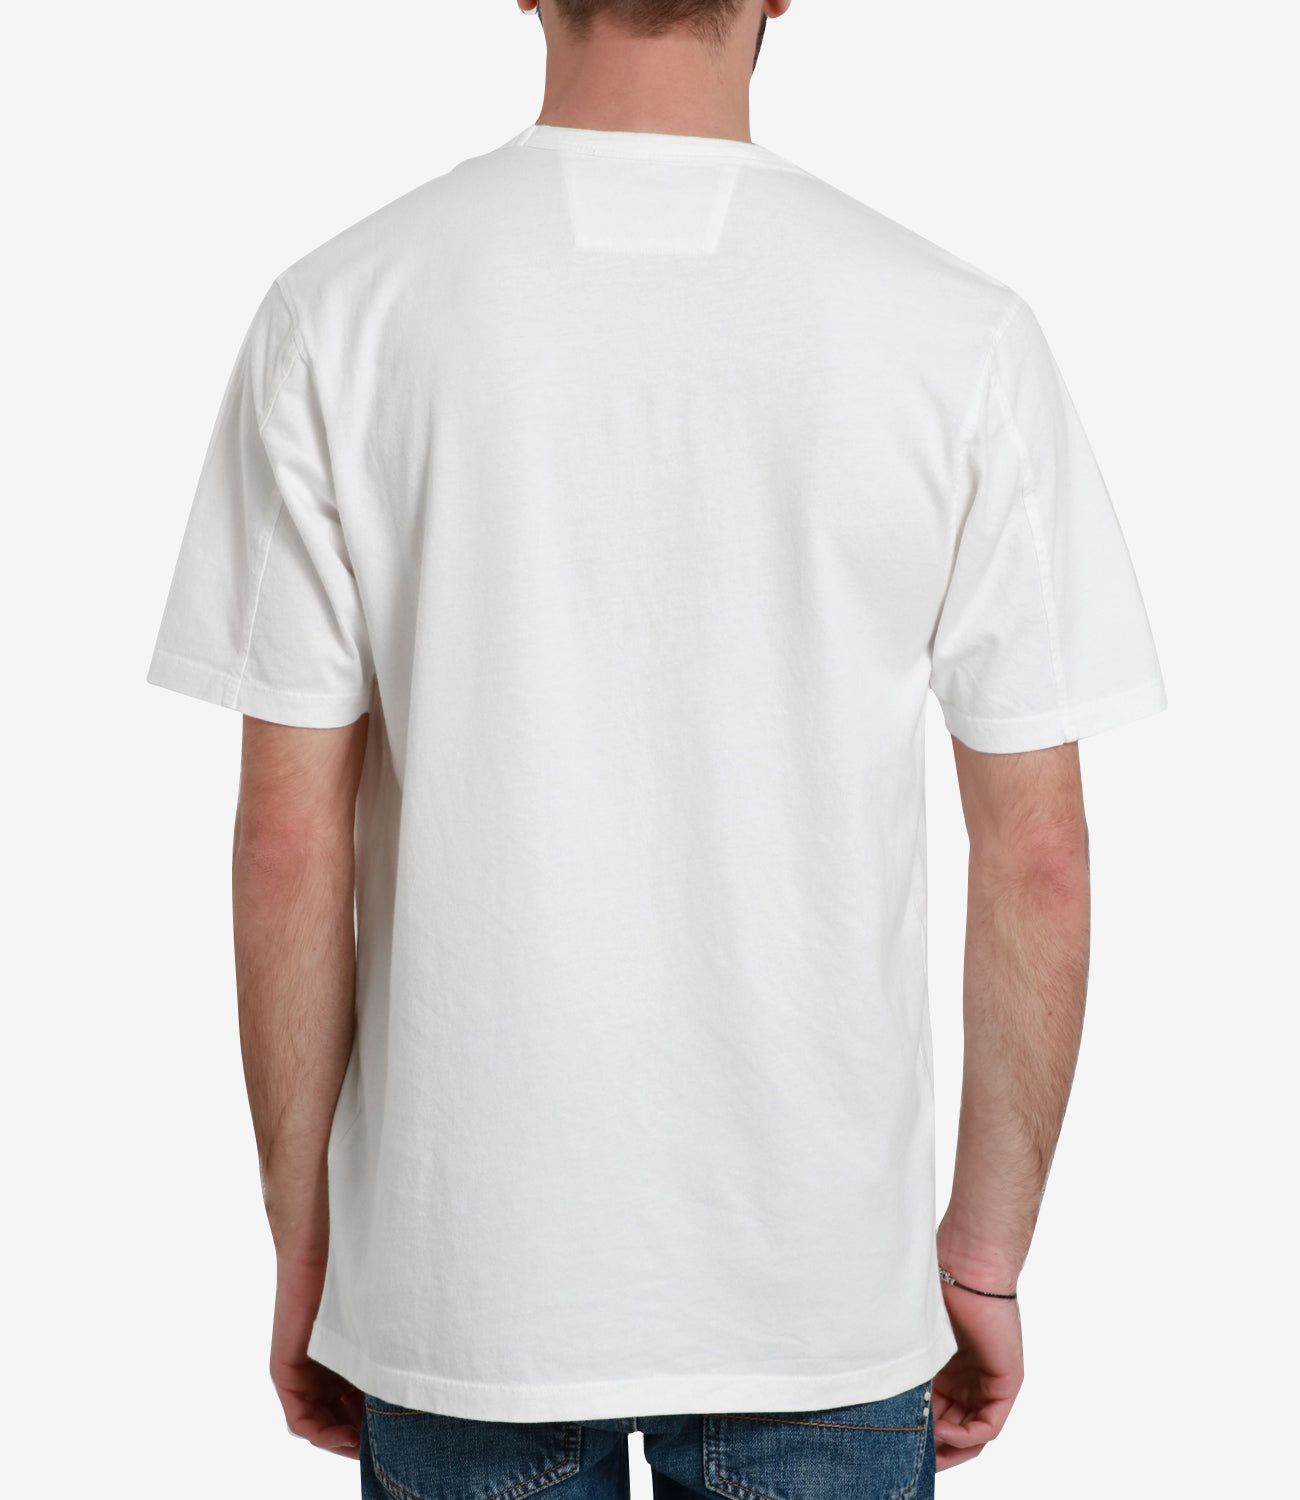 C.P. Company | T-Shirt White